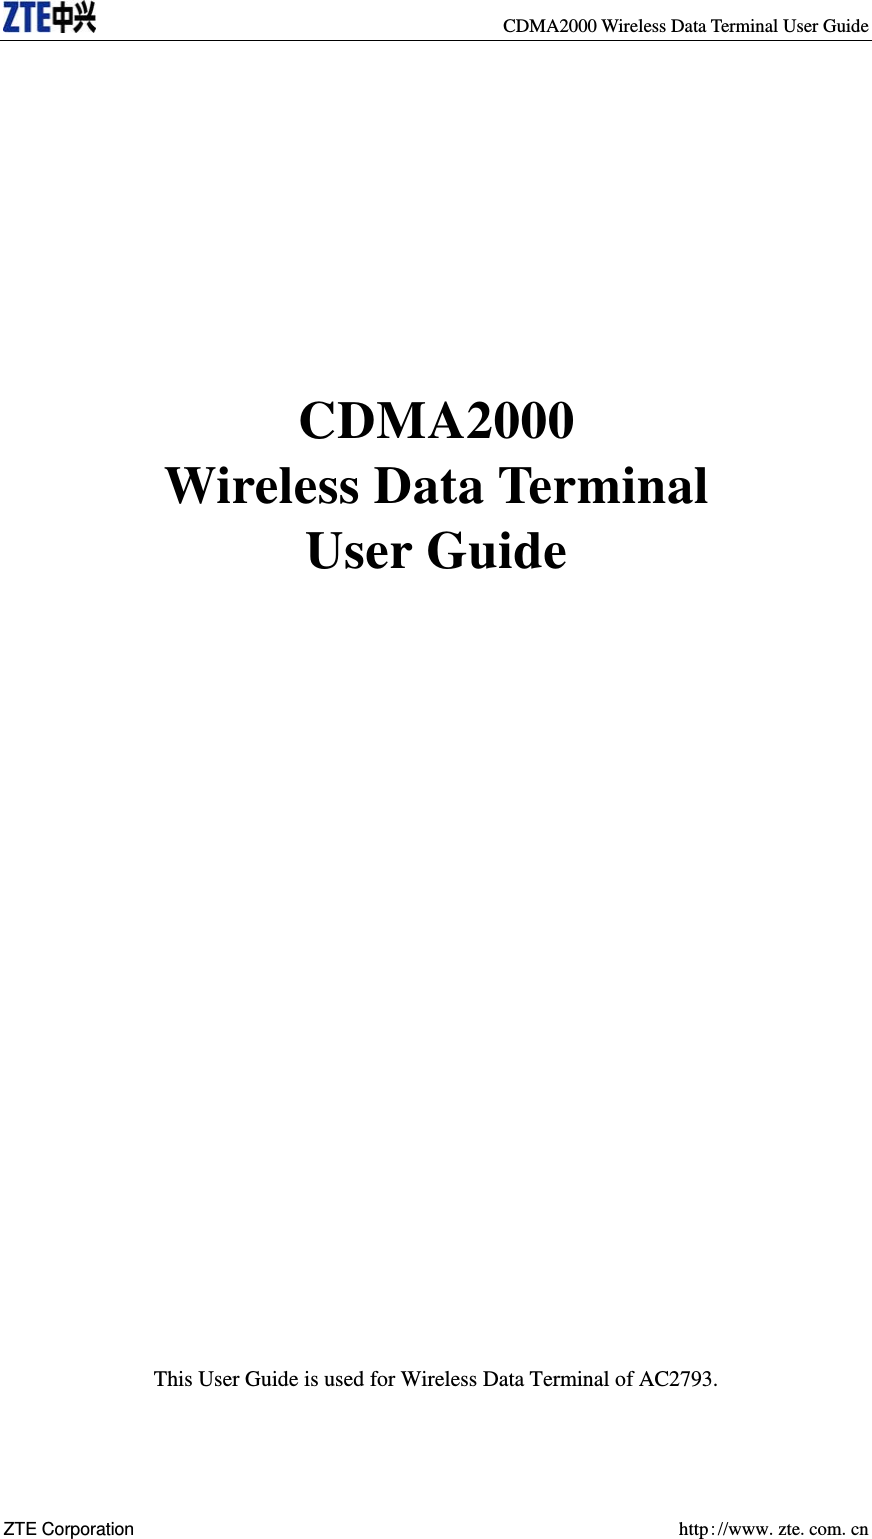     CDMA2000 Wireless Data Terminal User Guide ZTE Corporation  http://www.zte.com.cn        CDMA2000  Wireless Data Terminal User Guide                         This User Guide is used for Wireless Data Terminal of AC2793. 